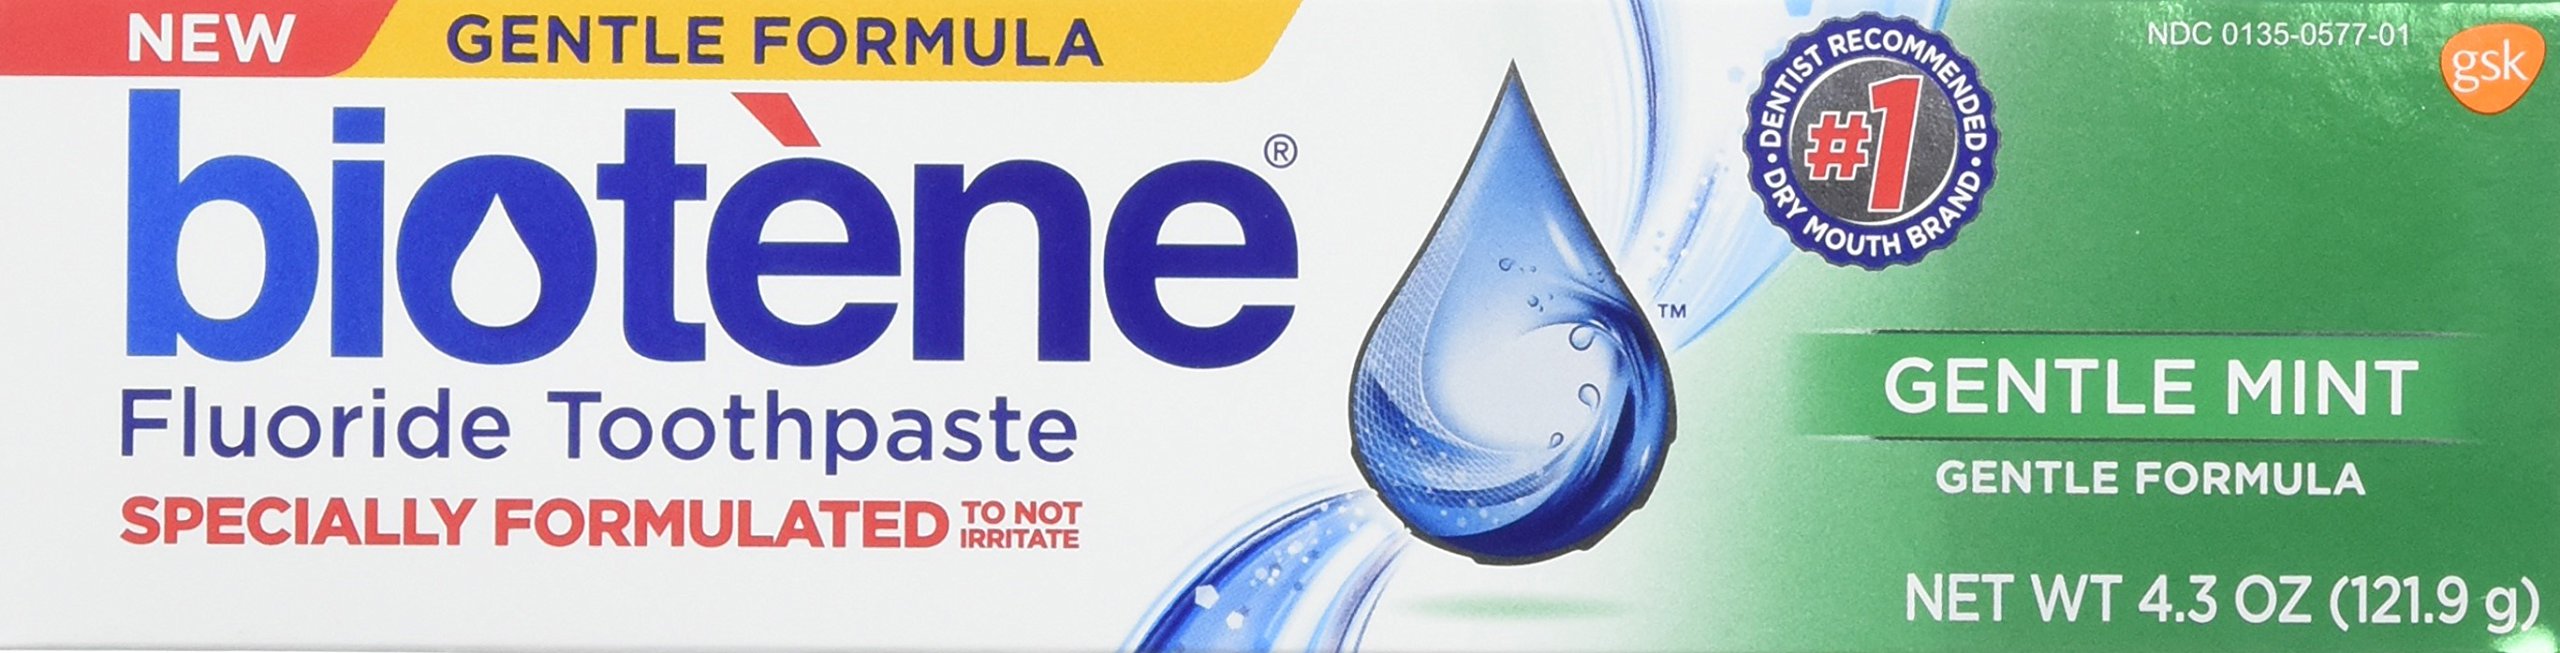 Biotène Gentle Mint Fluoride Toothpaste